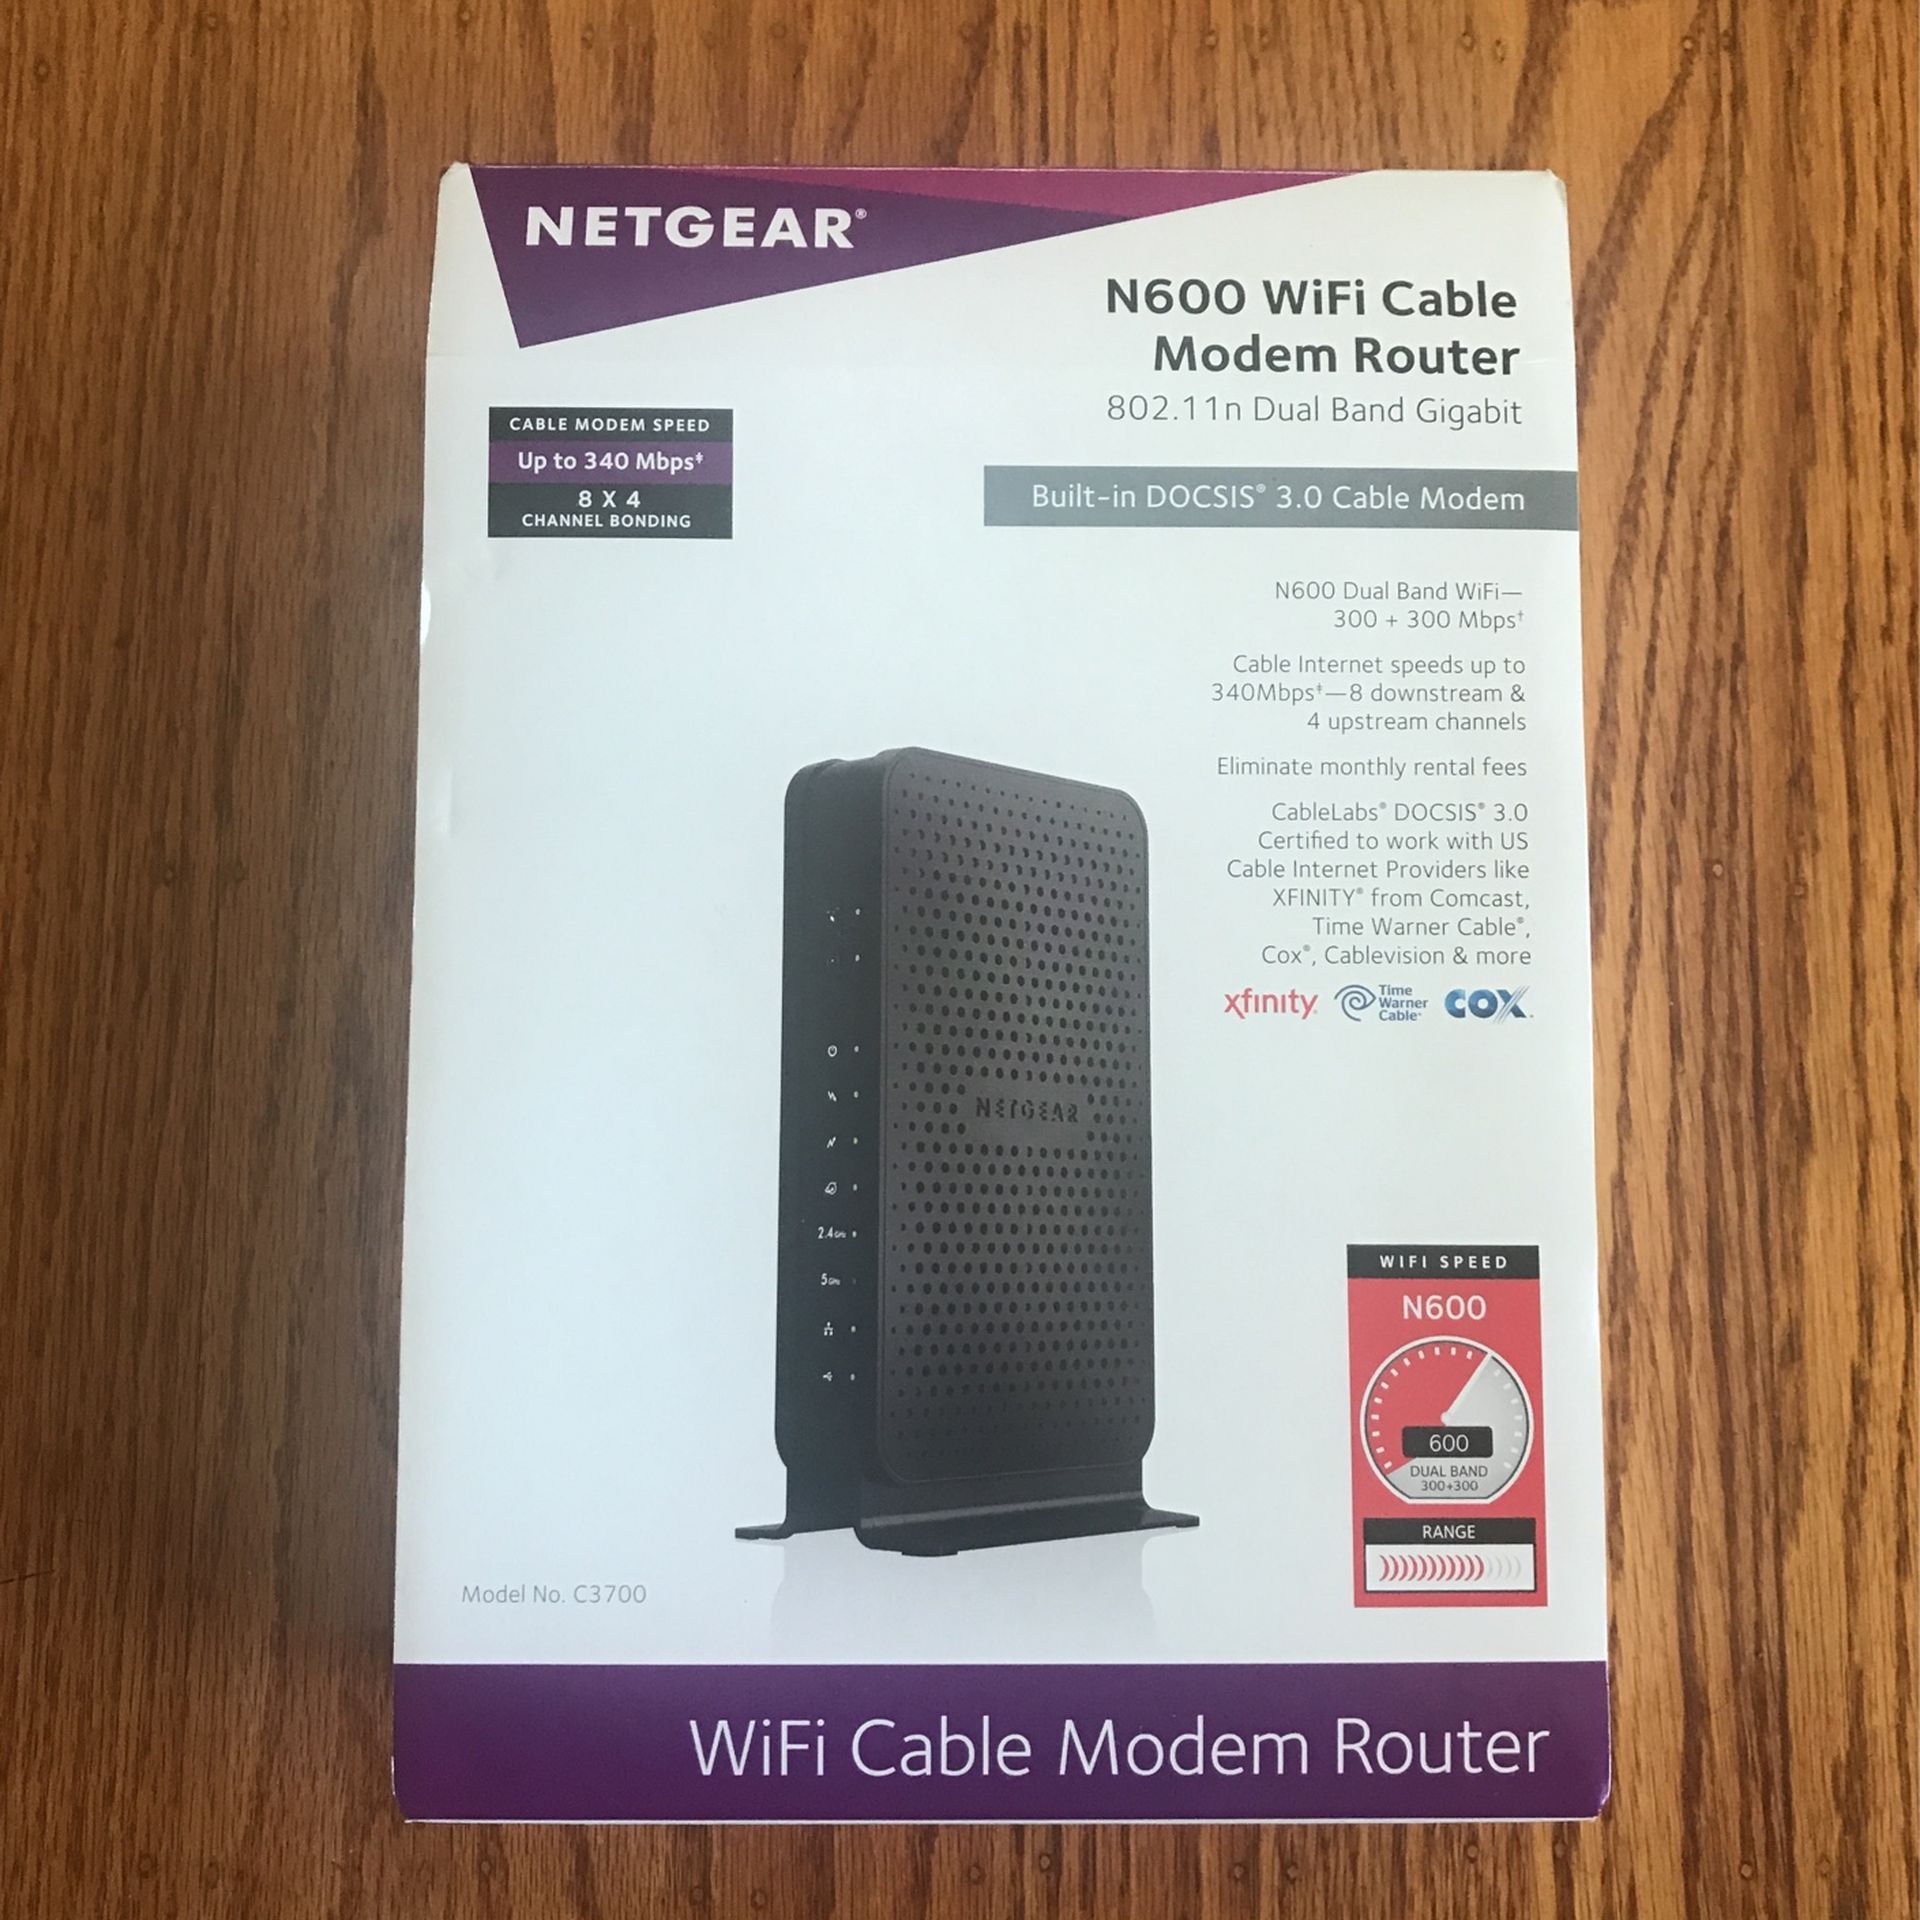 Netgear N600 WiFi Cable Modem Router